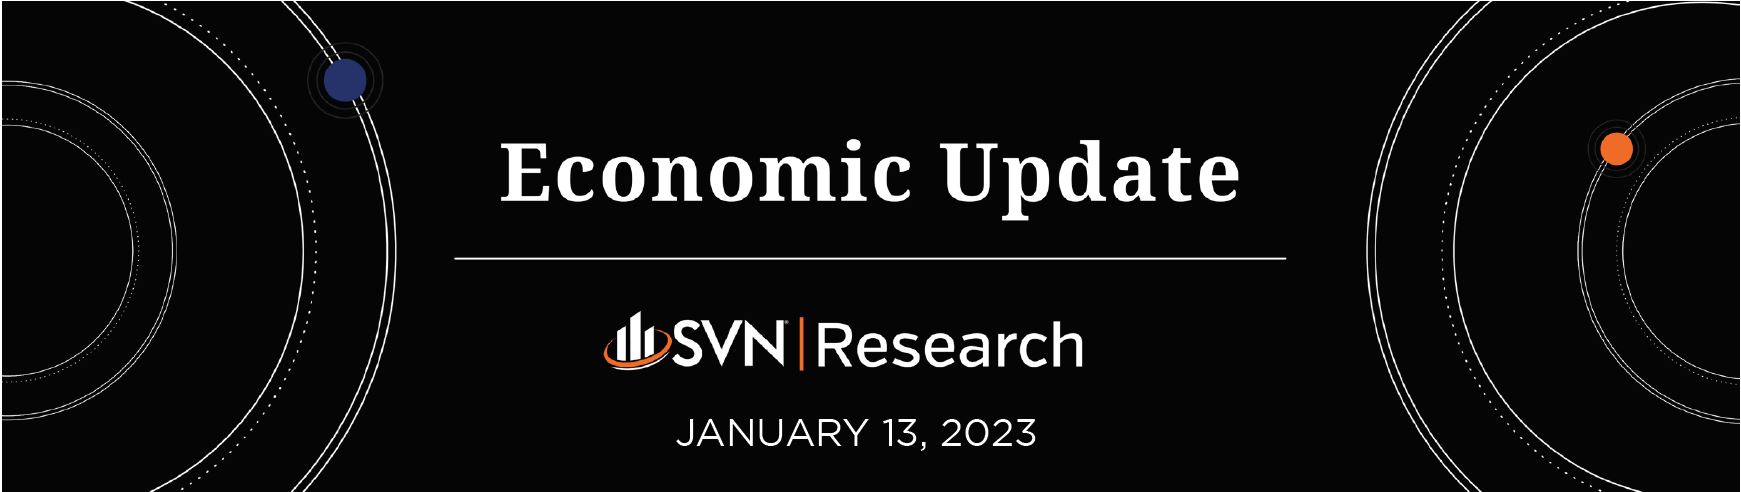 SVN | Research Economic Update 01.13.2023